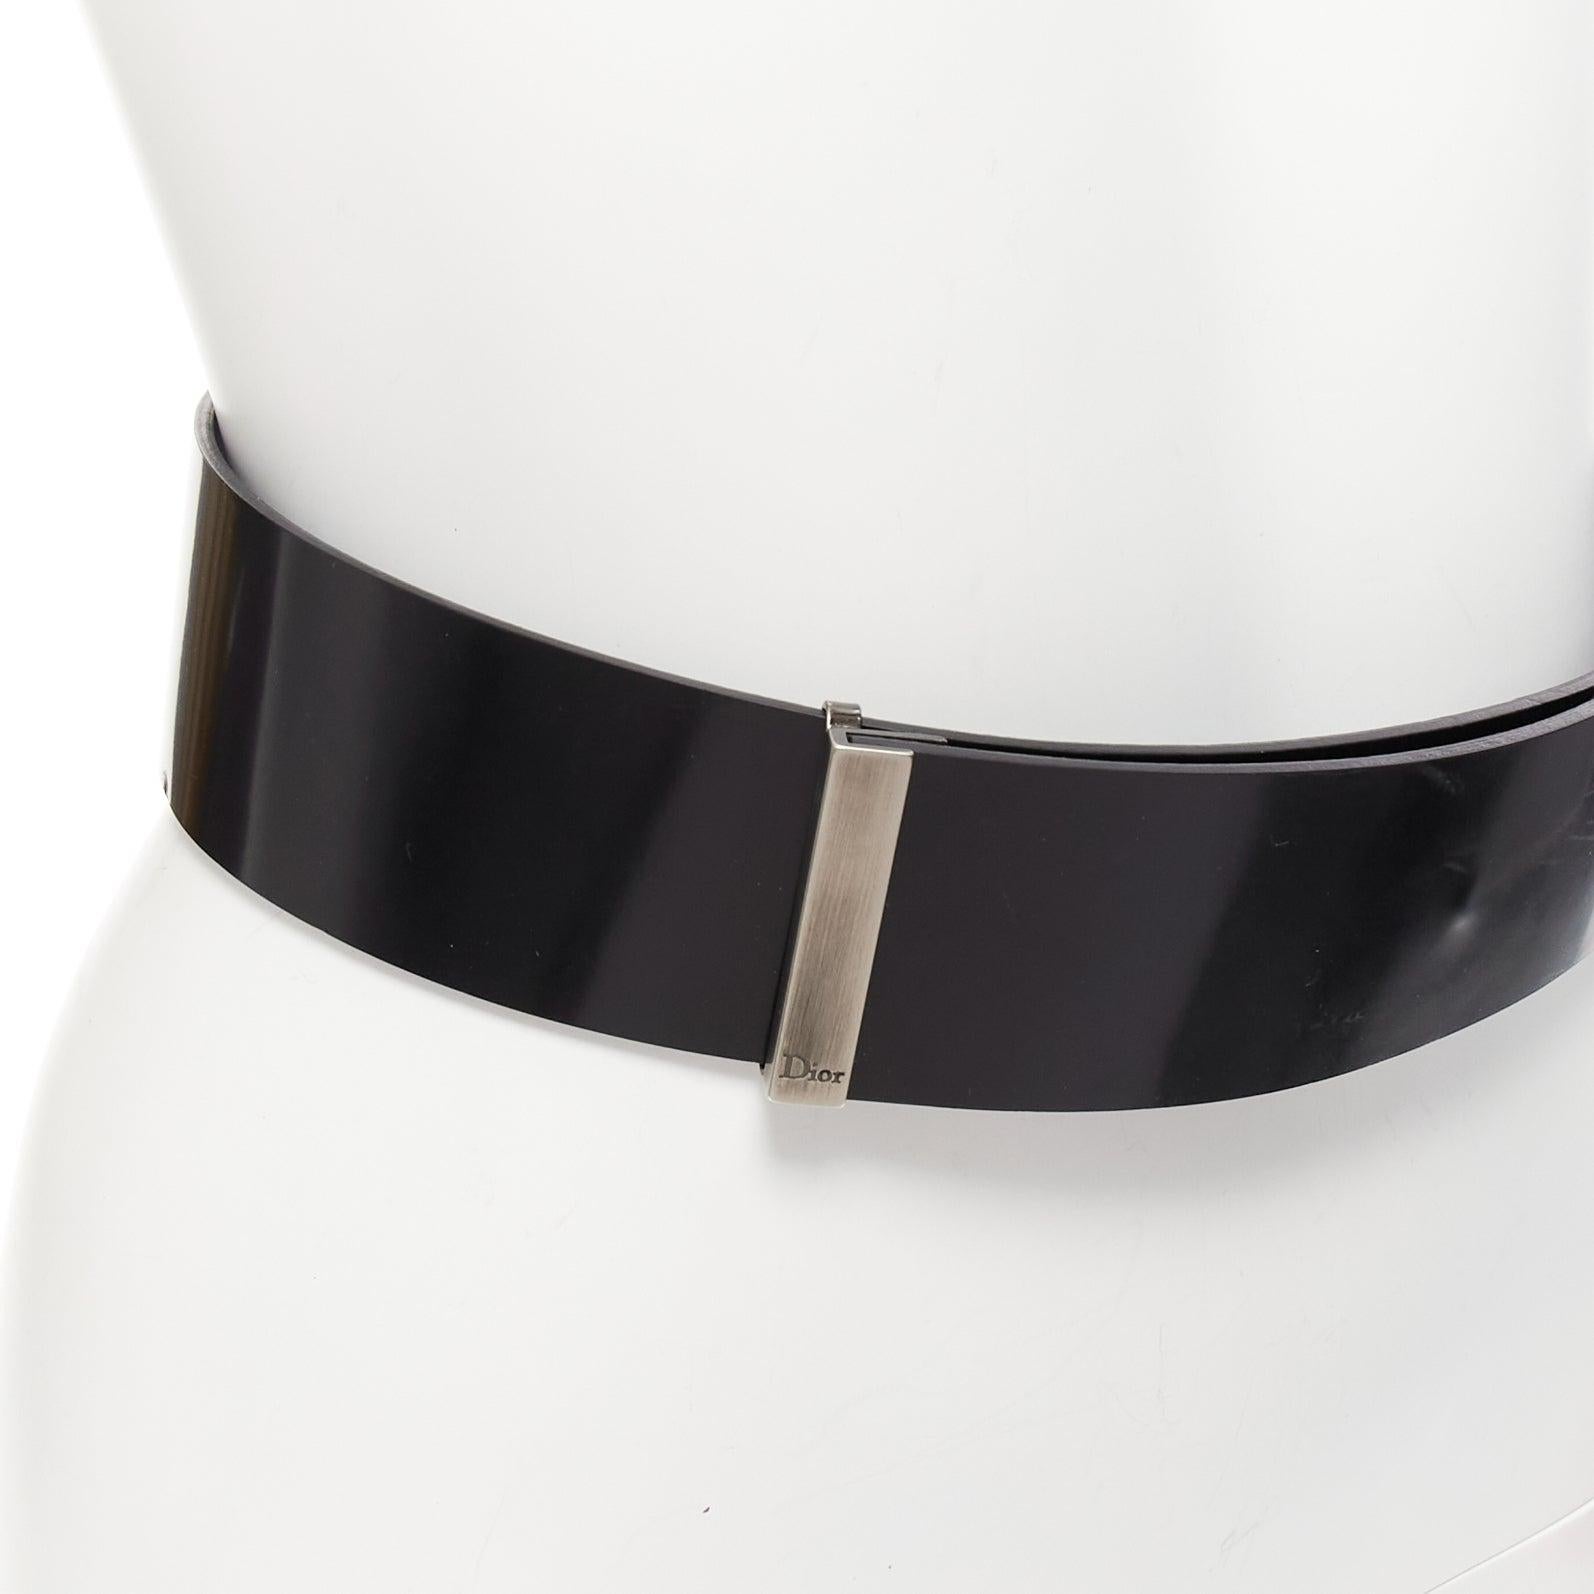 DIOR minimal logo metal bar black smooth calfskin wide belt 90cm
Reference: AAWC/A01202
Brand: Dior
Material: Leather, Metal
Color: Black, Silver
Pattern: Solid
Closure: Belt
Lining: Black Leather
Extra Details: Gunmetal metal bar at end of belt